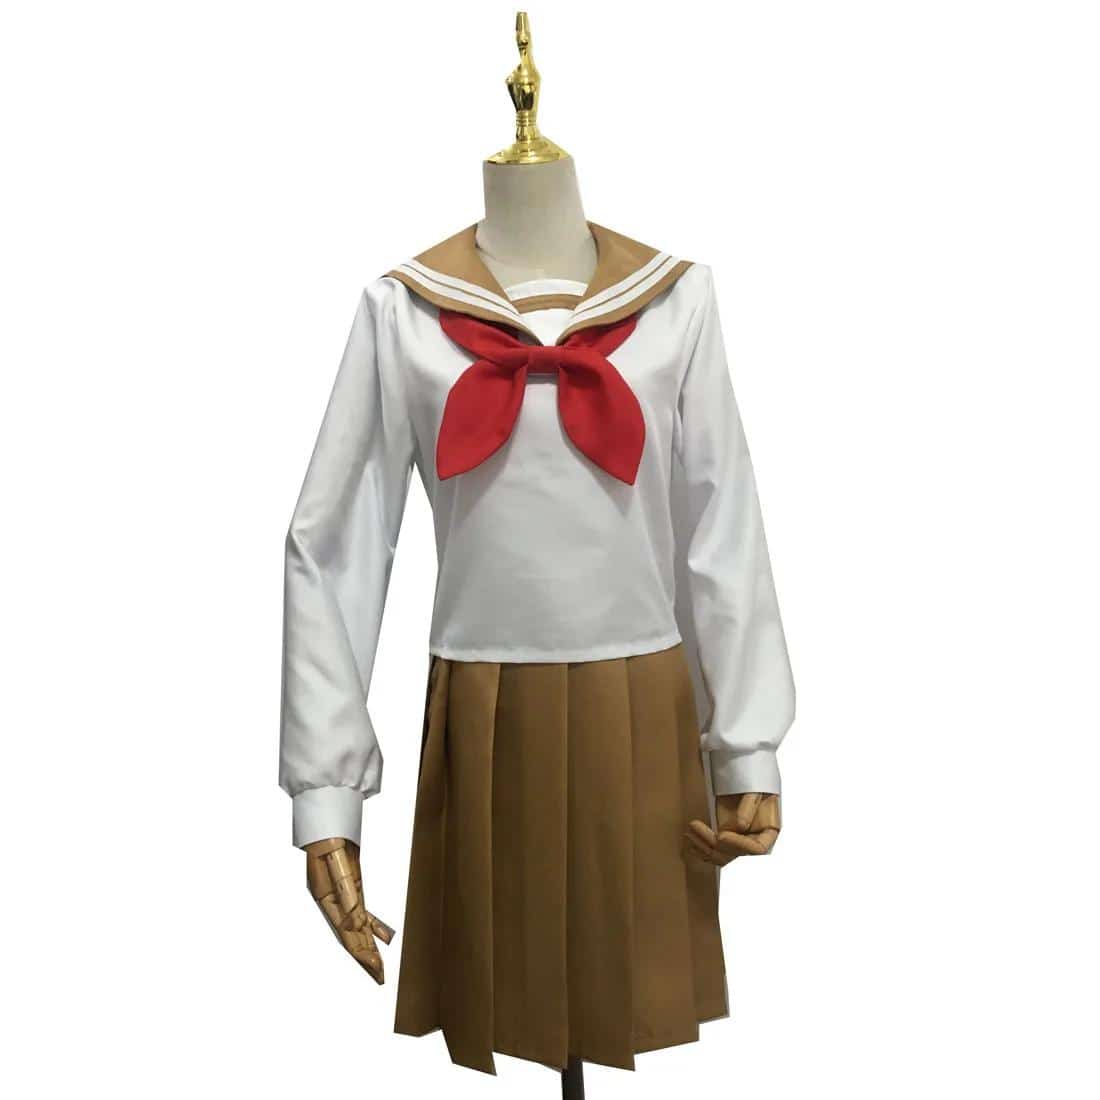 2022 PSYCHO-PASS Ouryou Rikako Public Safety Bureau Uniform Suit Cosplay Costume PSYCHO-PASS Halloween Party Dress Coat Shirt sk 1